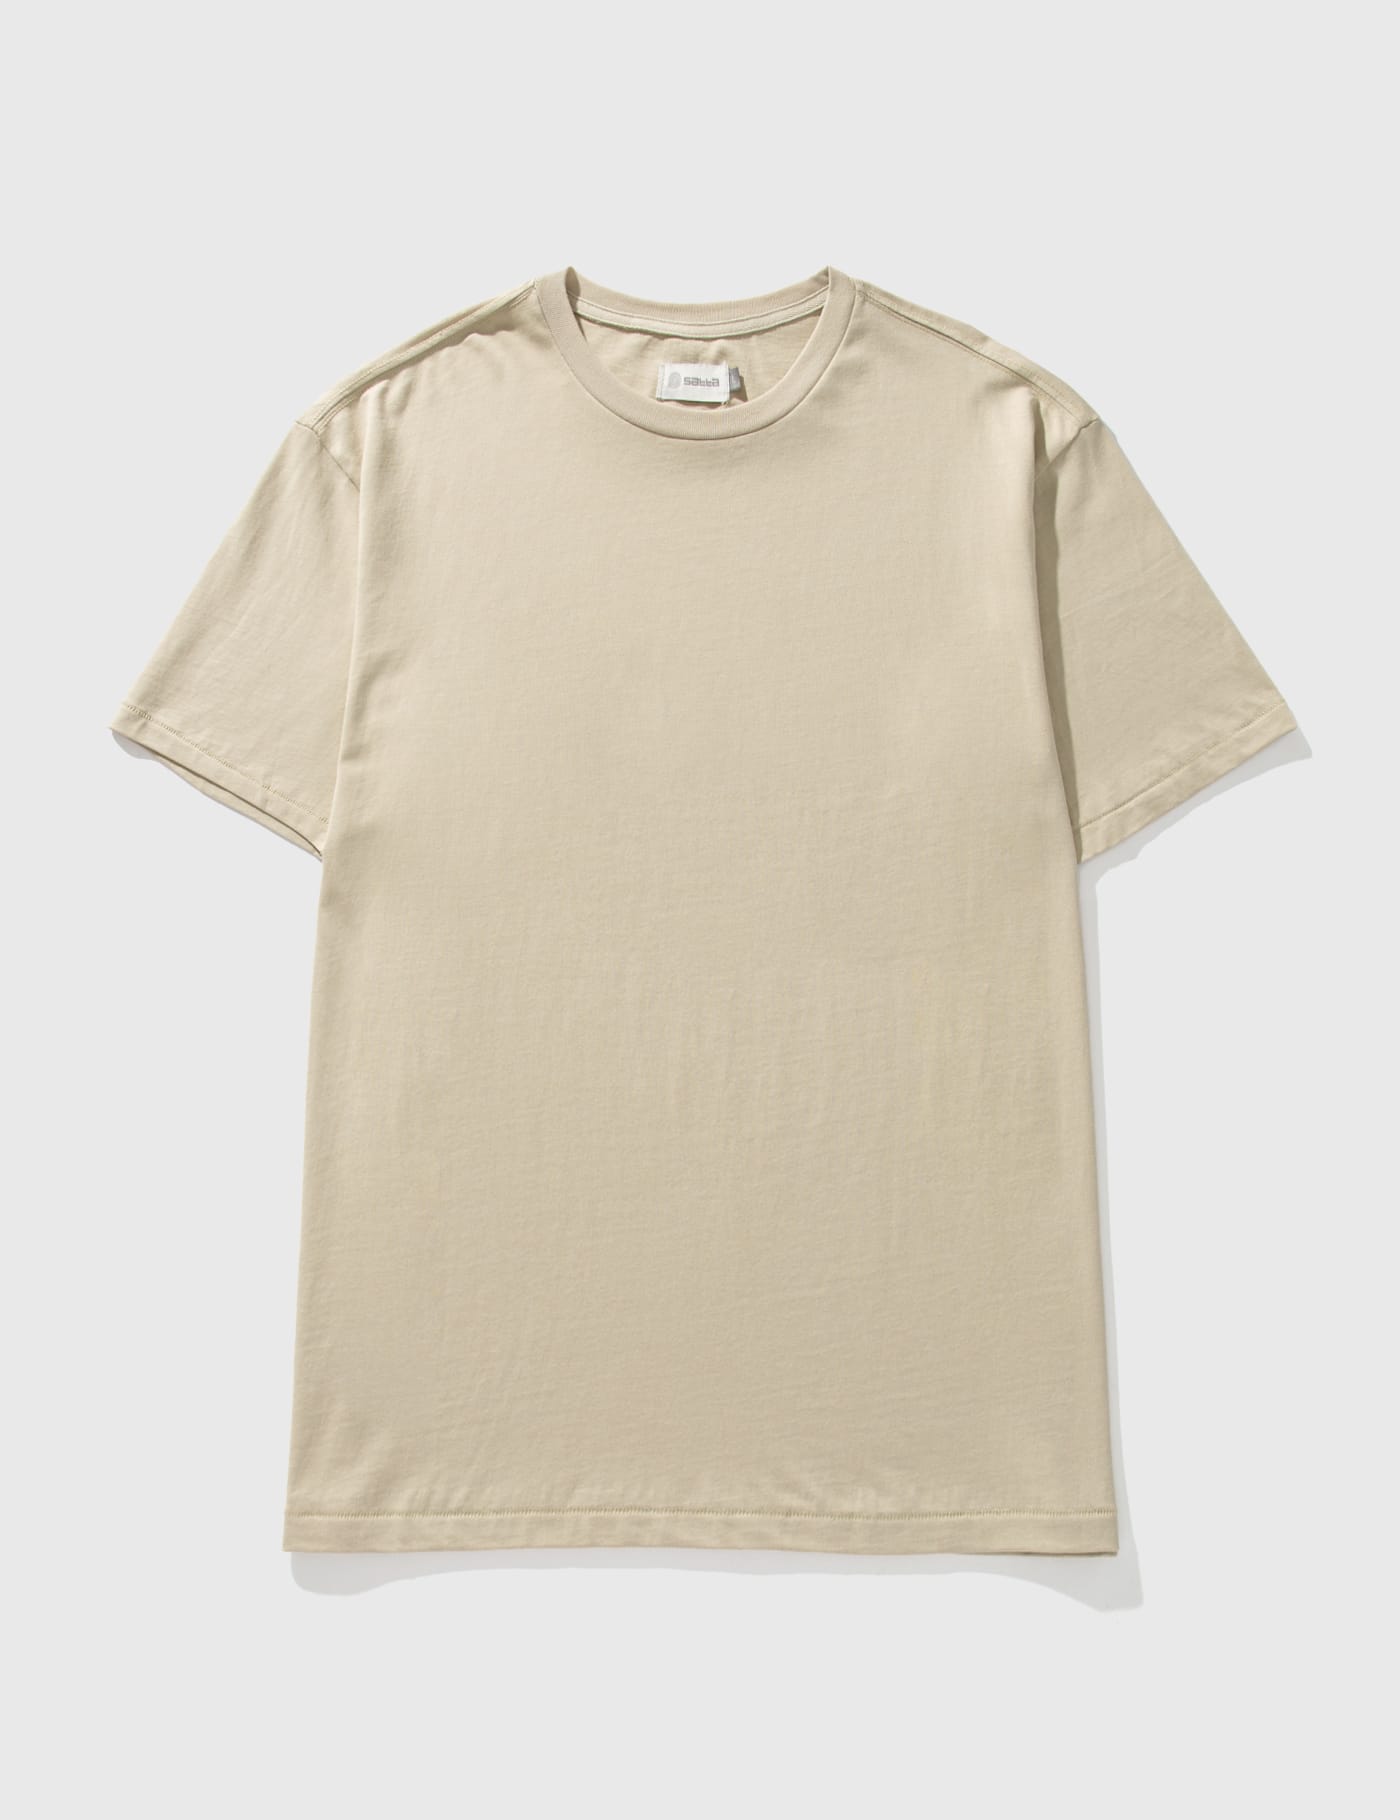 Satta - Organic Cotton T-shirt | HBX - Globally Curated Fashion